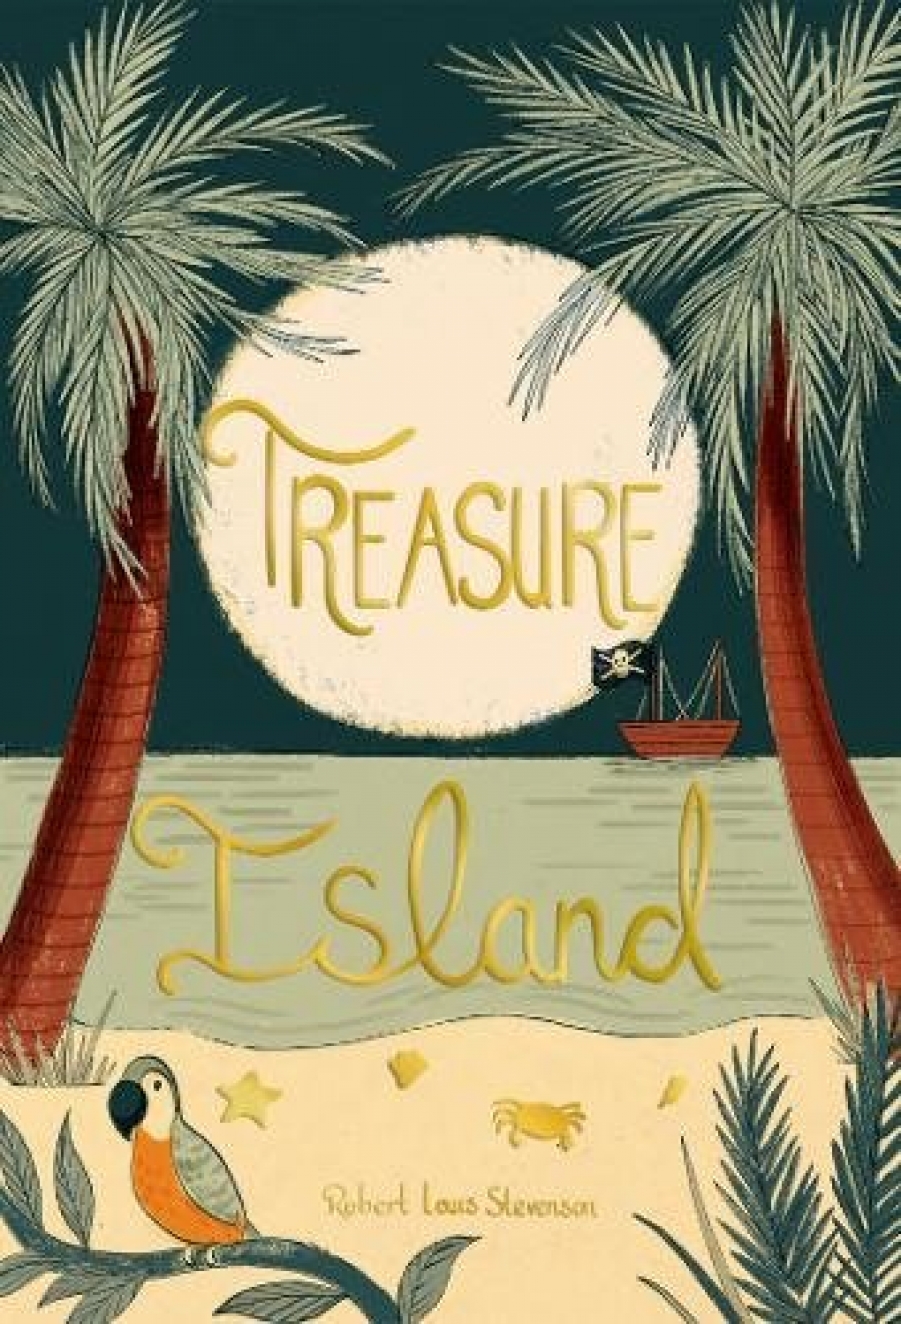 Robert Louis Stevenson Treasure Island 